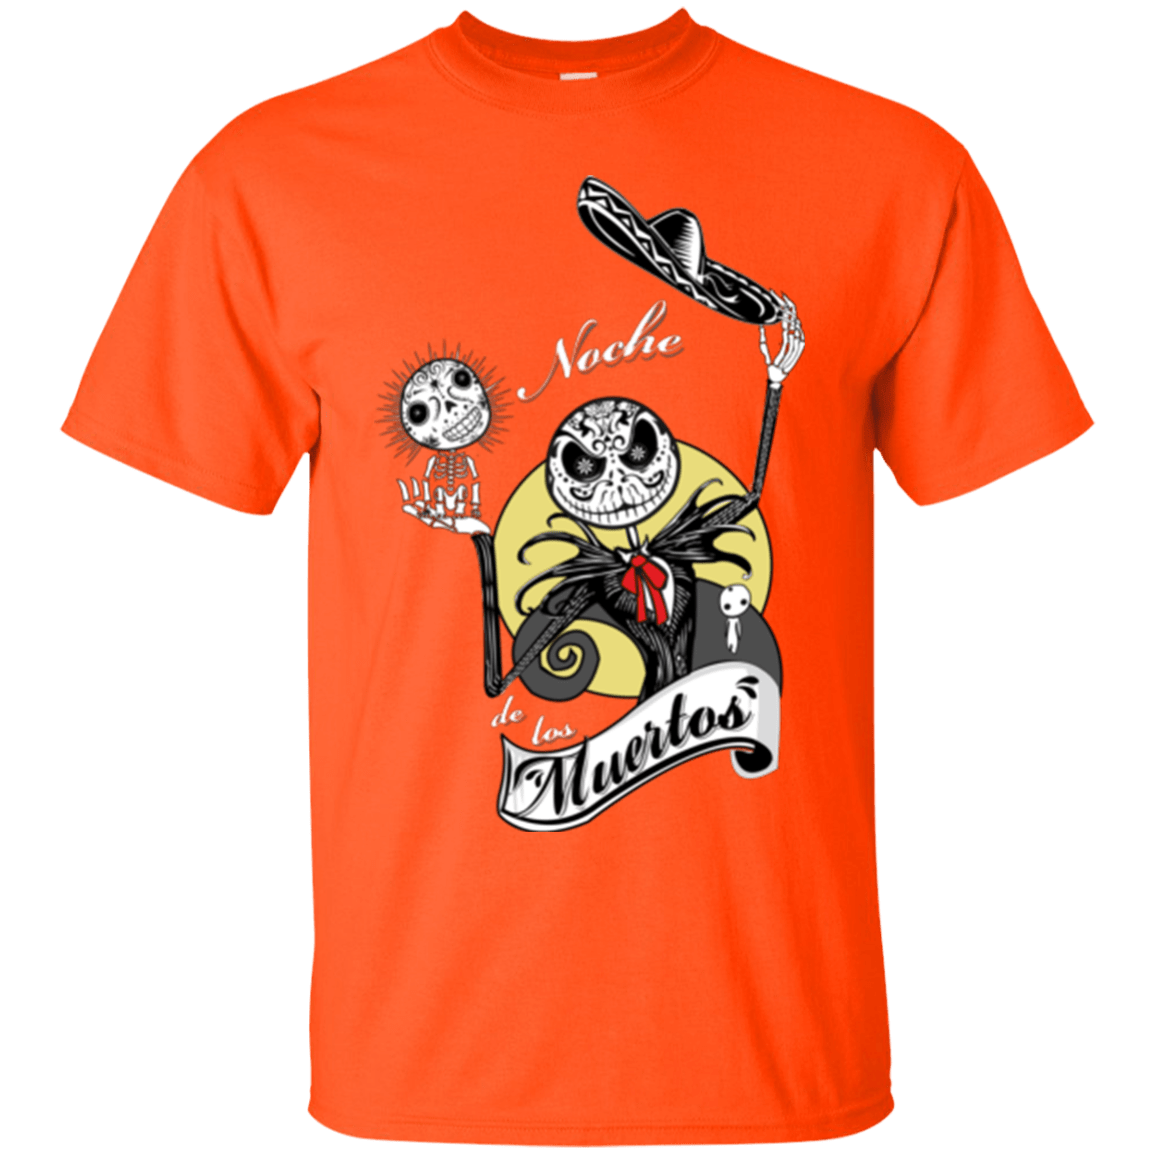 T-Shirts Orange / Small Noche de los Muertos T-Shirt